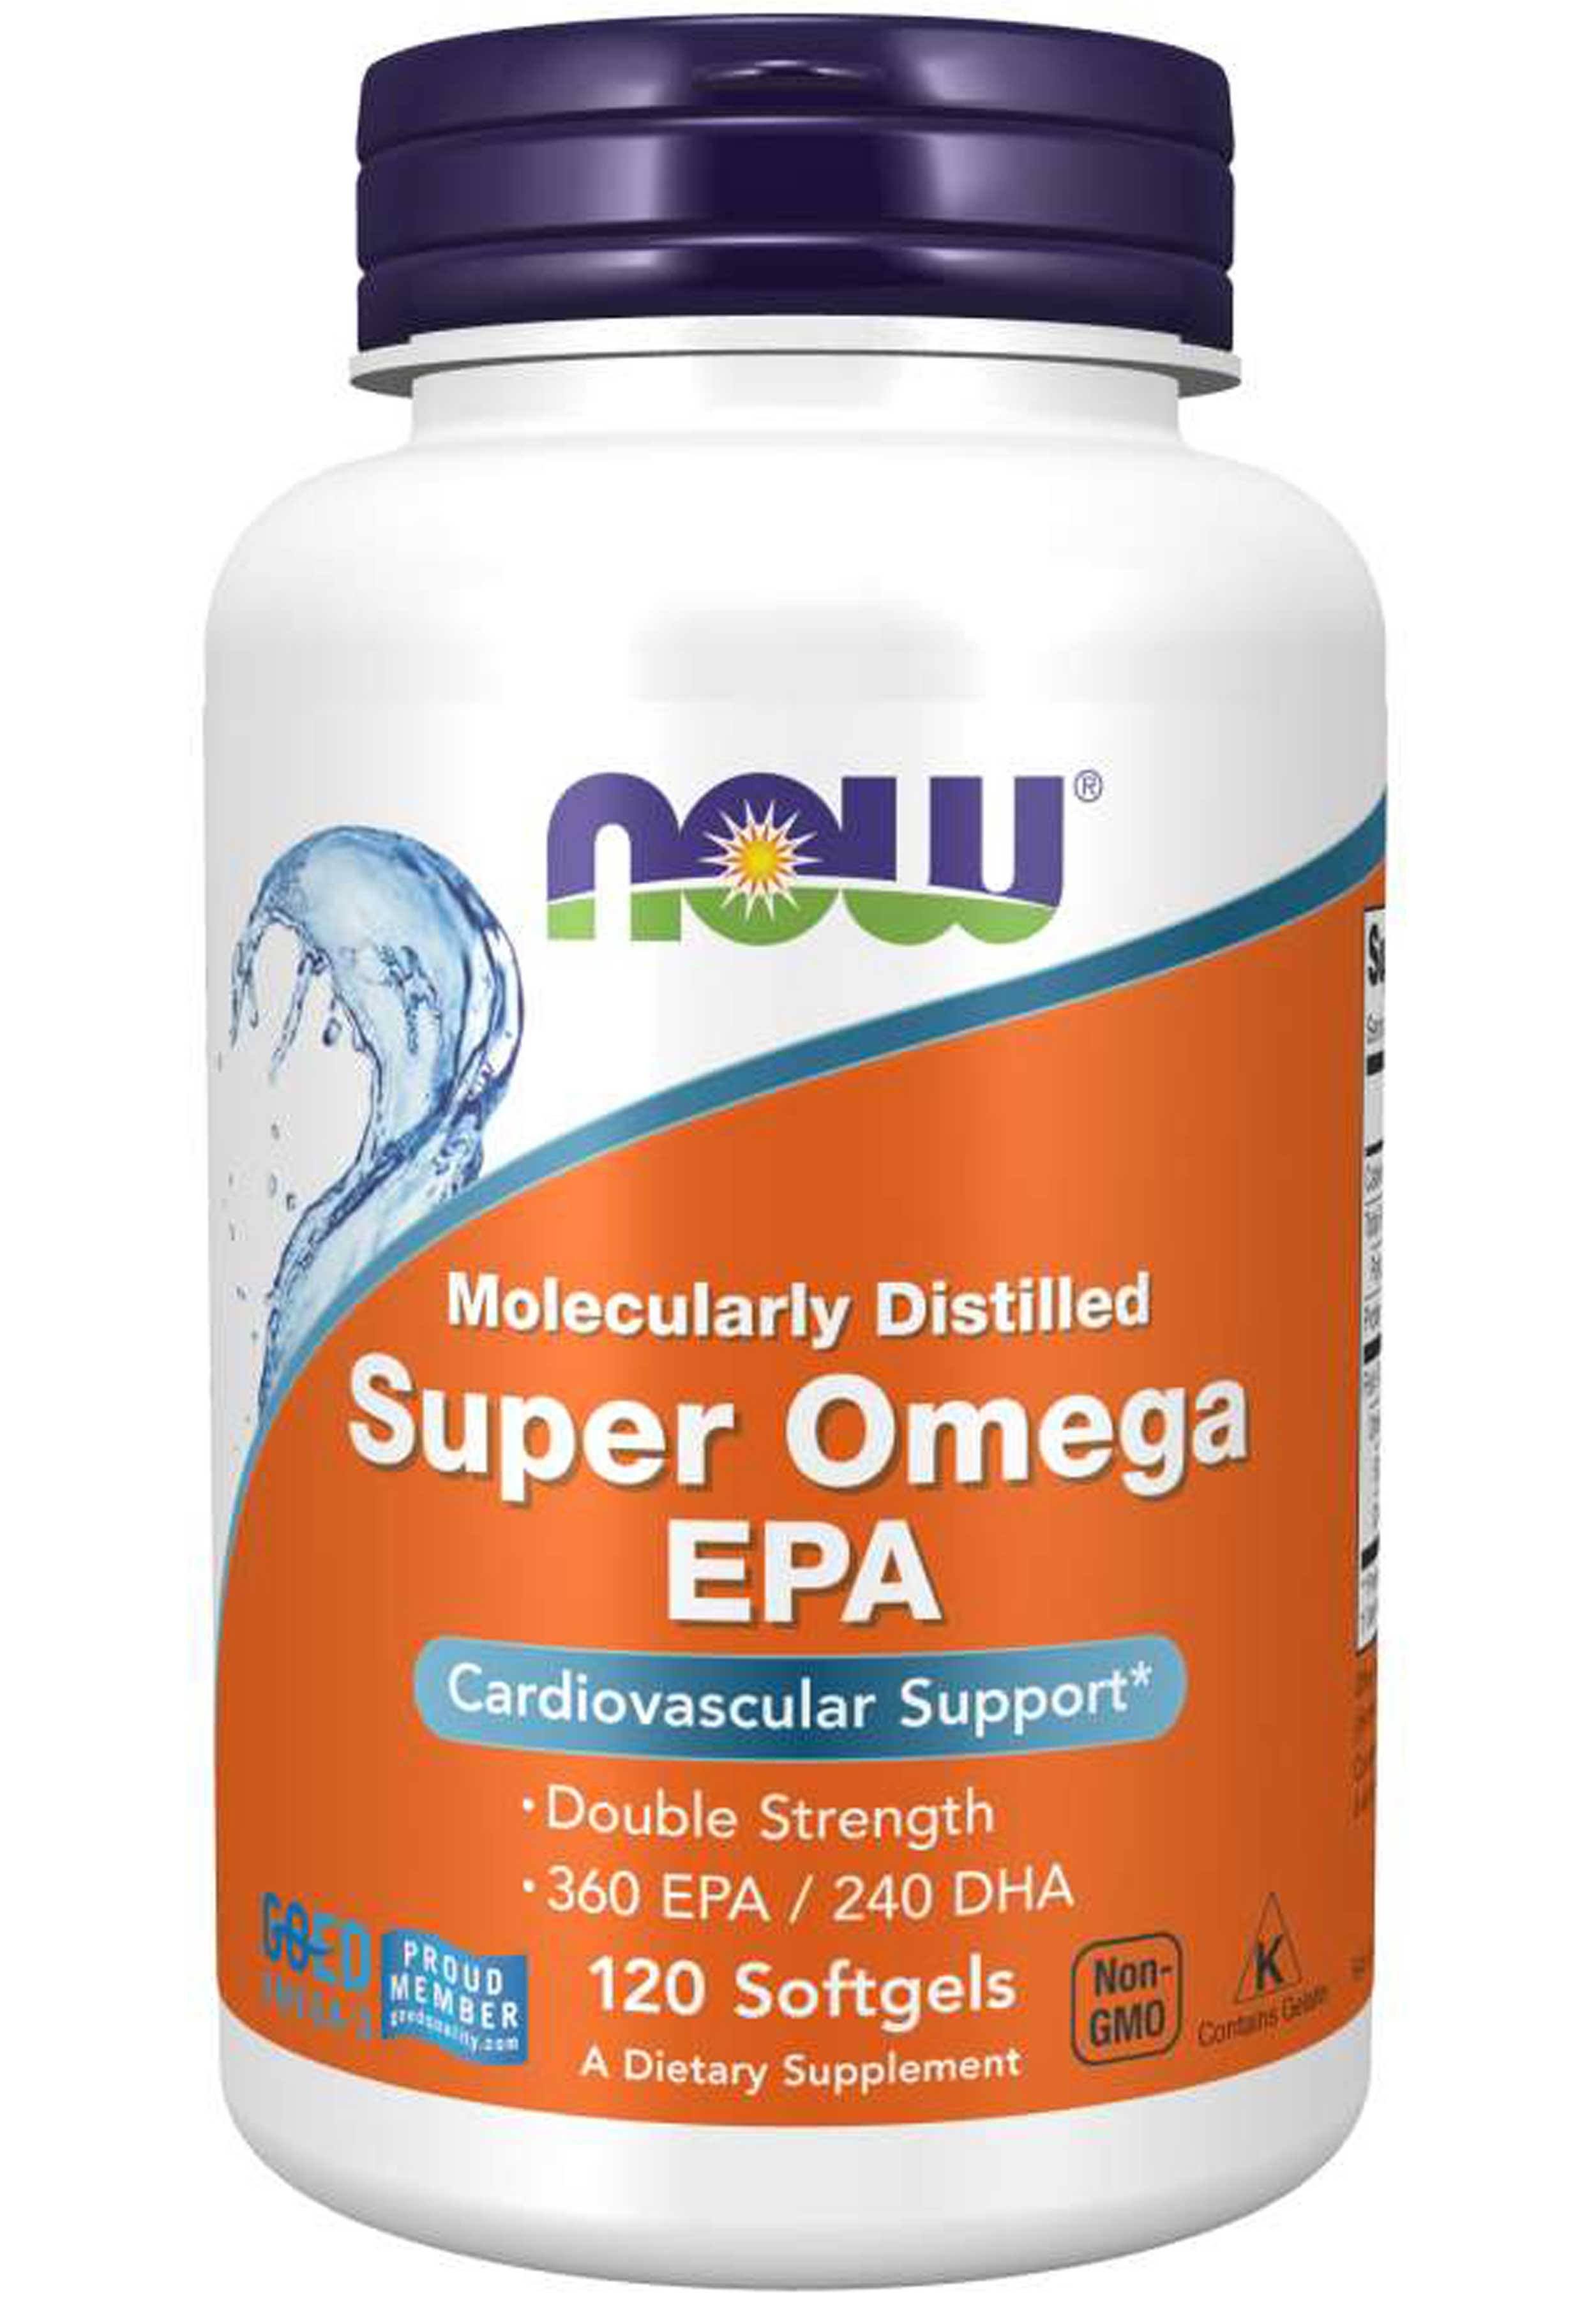 NOW Foods Super Omega EPA Supplement - 120 softgels